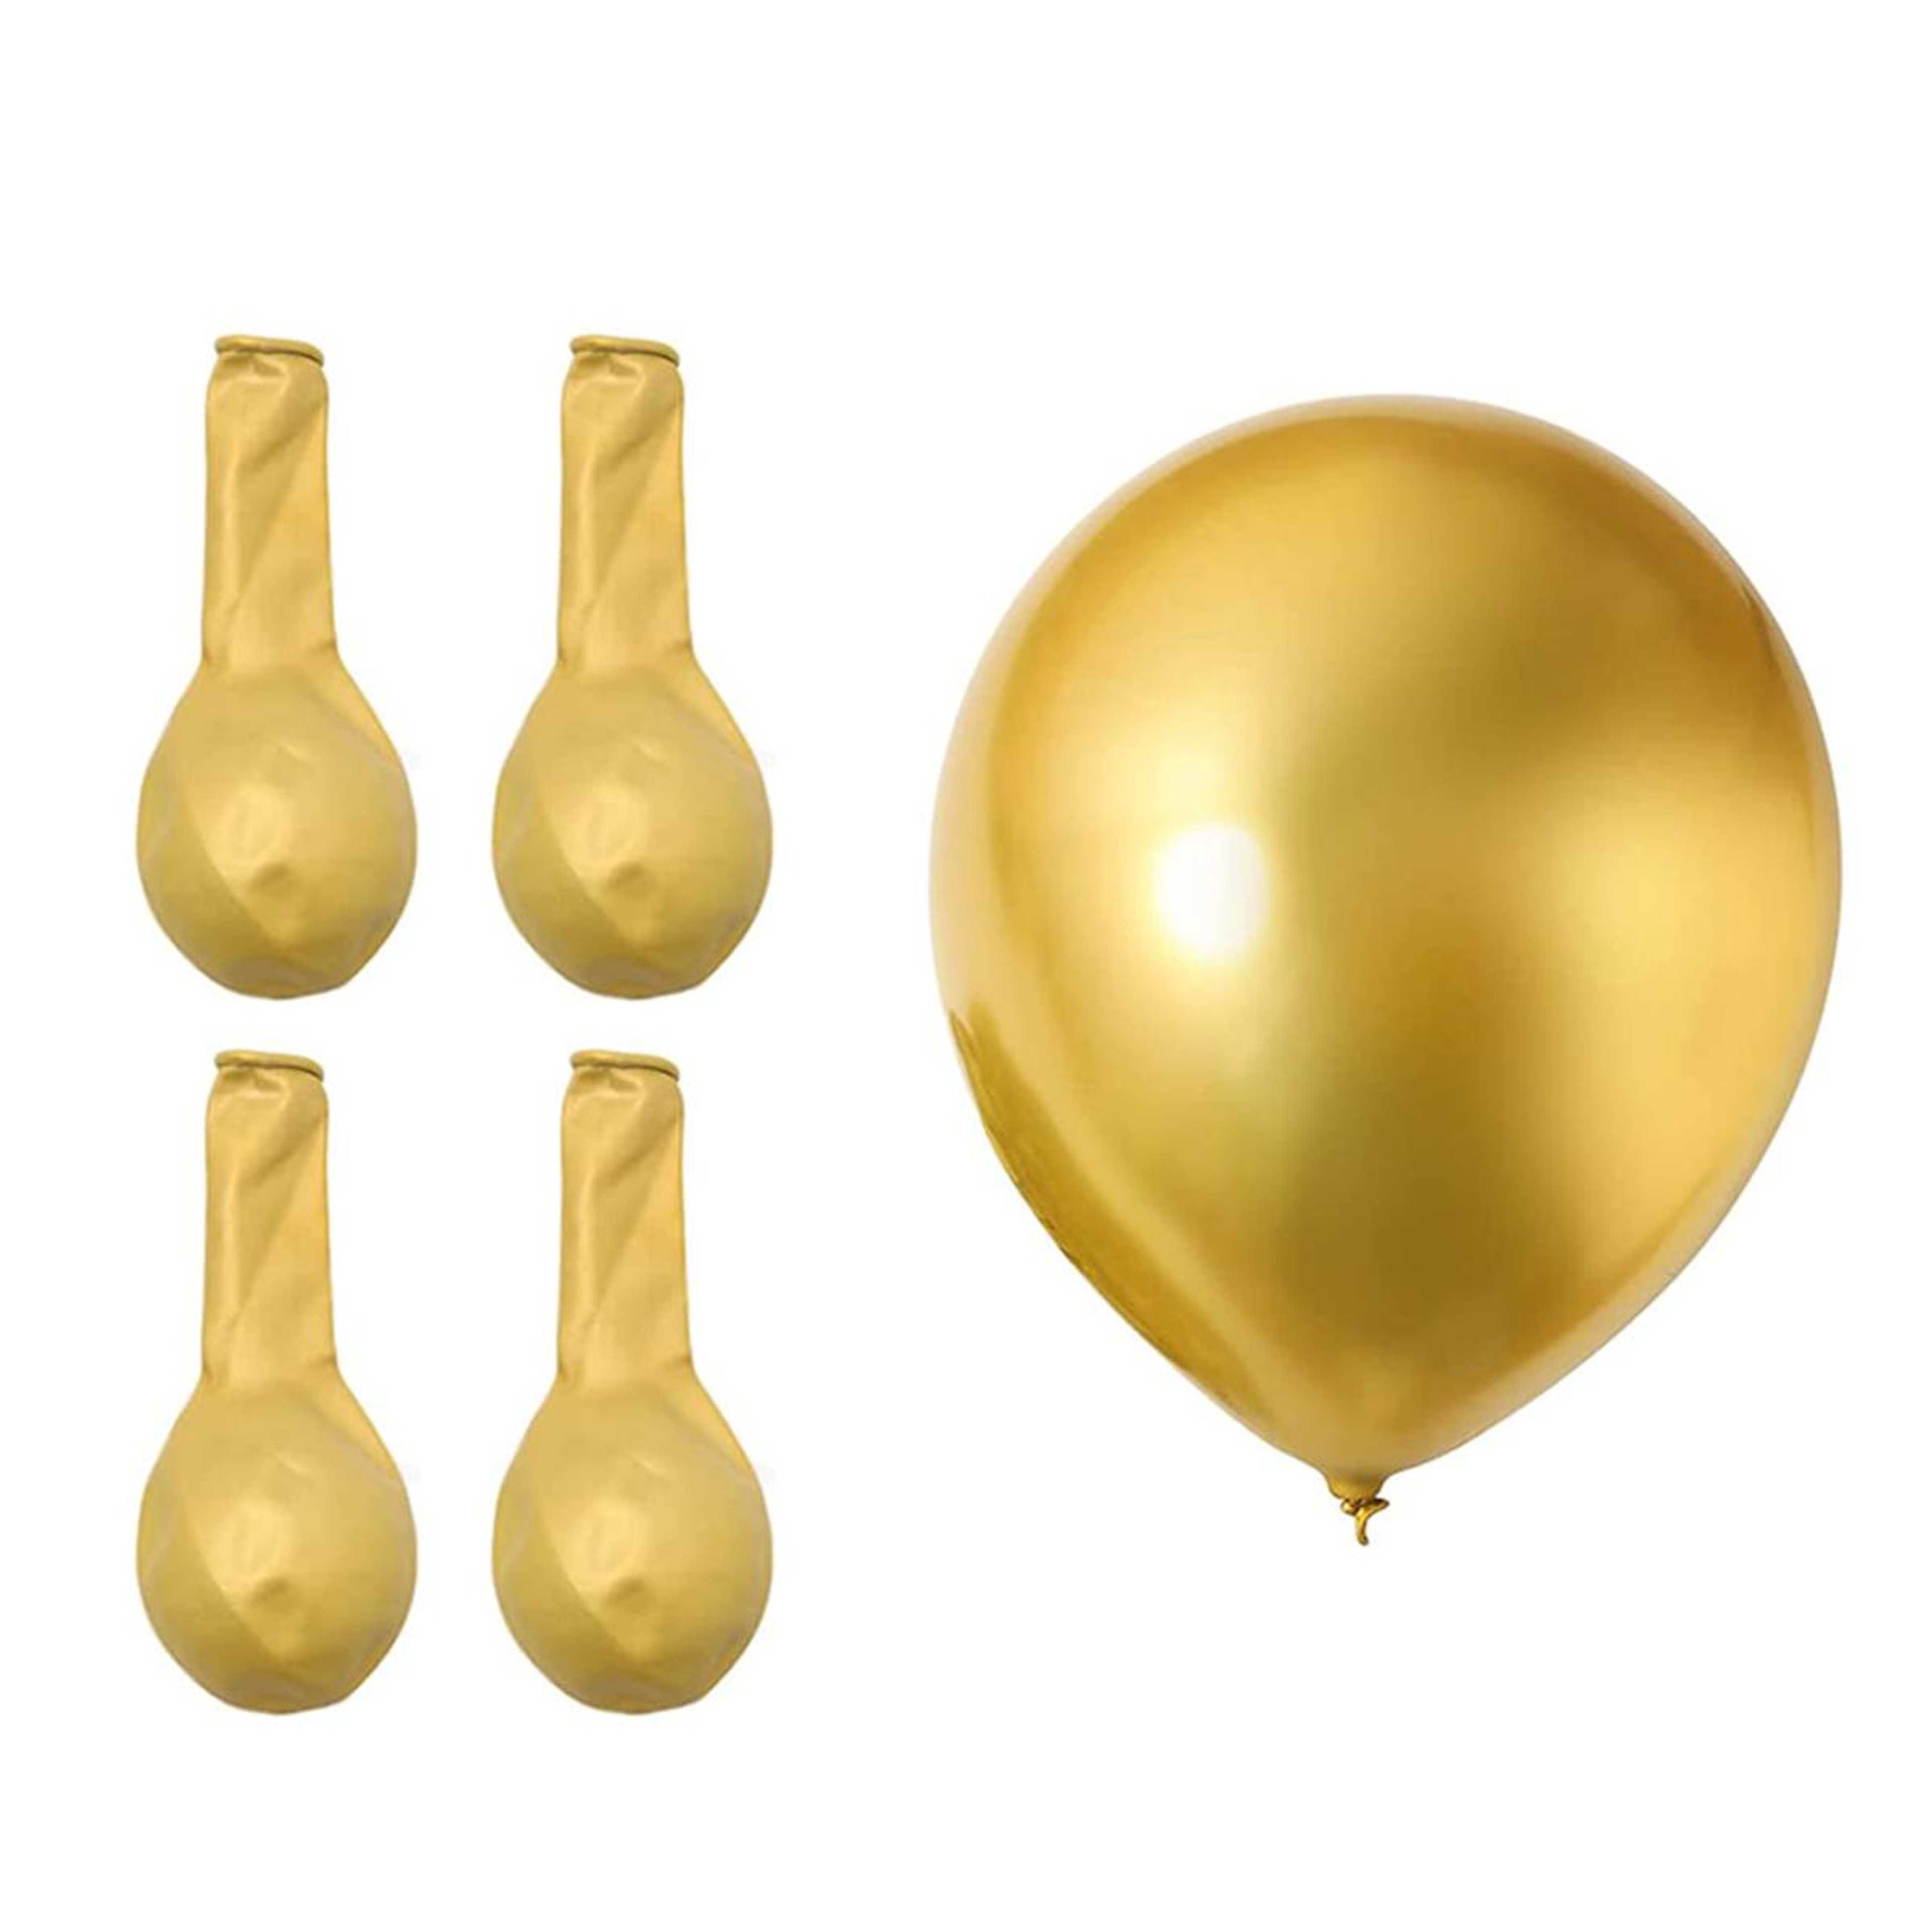 14 Pcs Golden Confetti Decorative Party Balloons Set